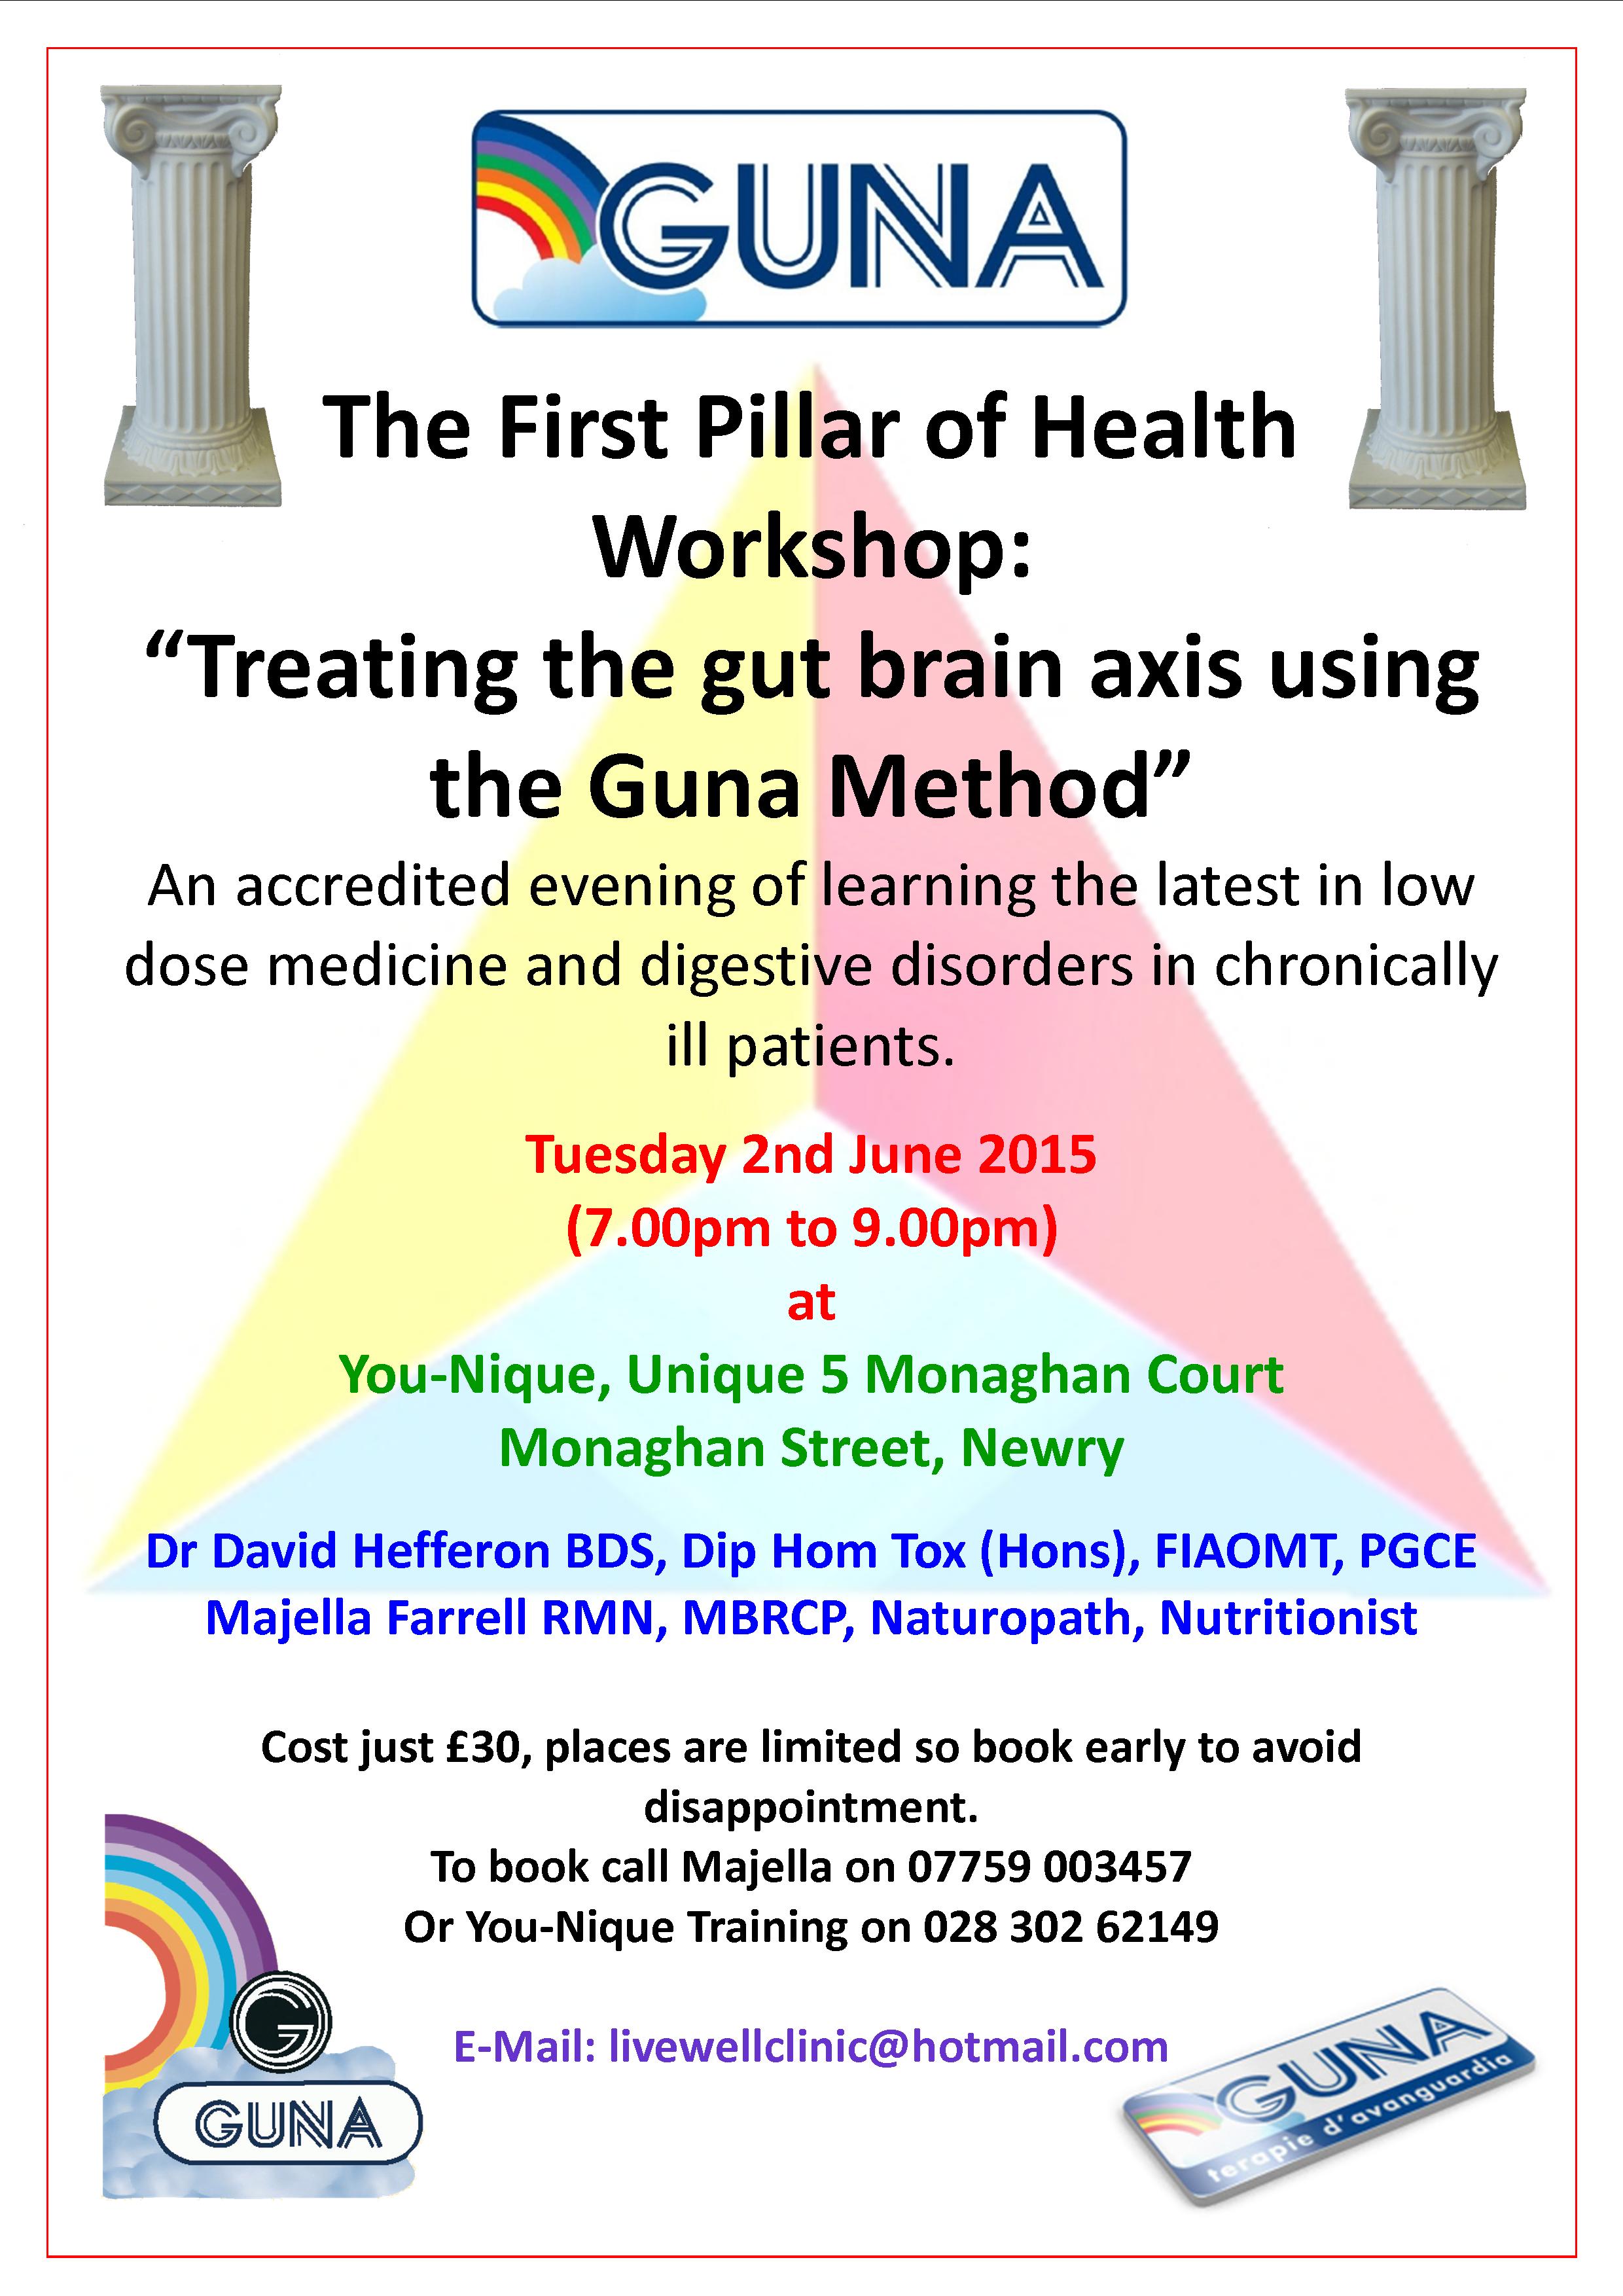  The First Pillar of Health Workshop:  Treating the gut brain axis using the GUNA Method